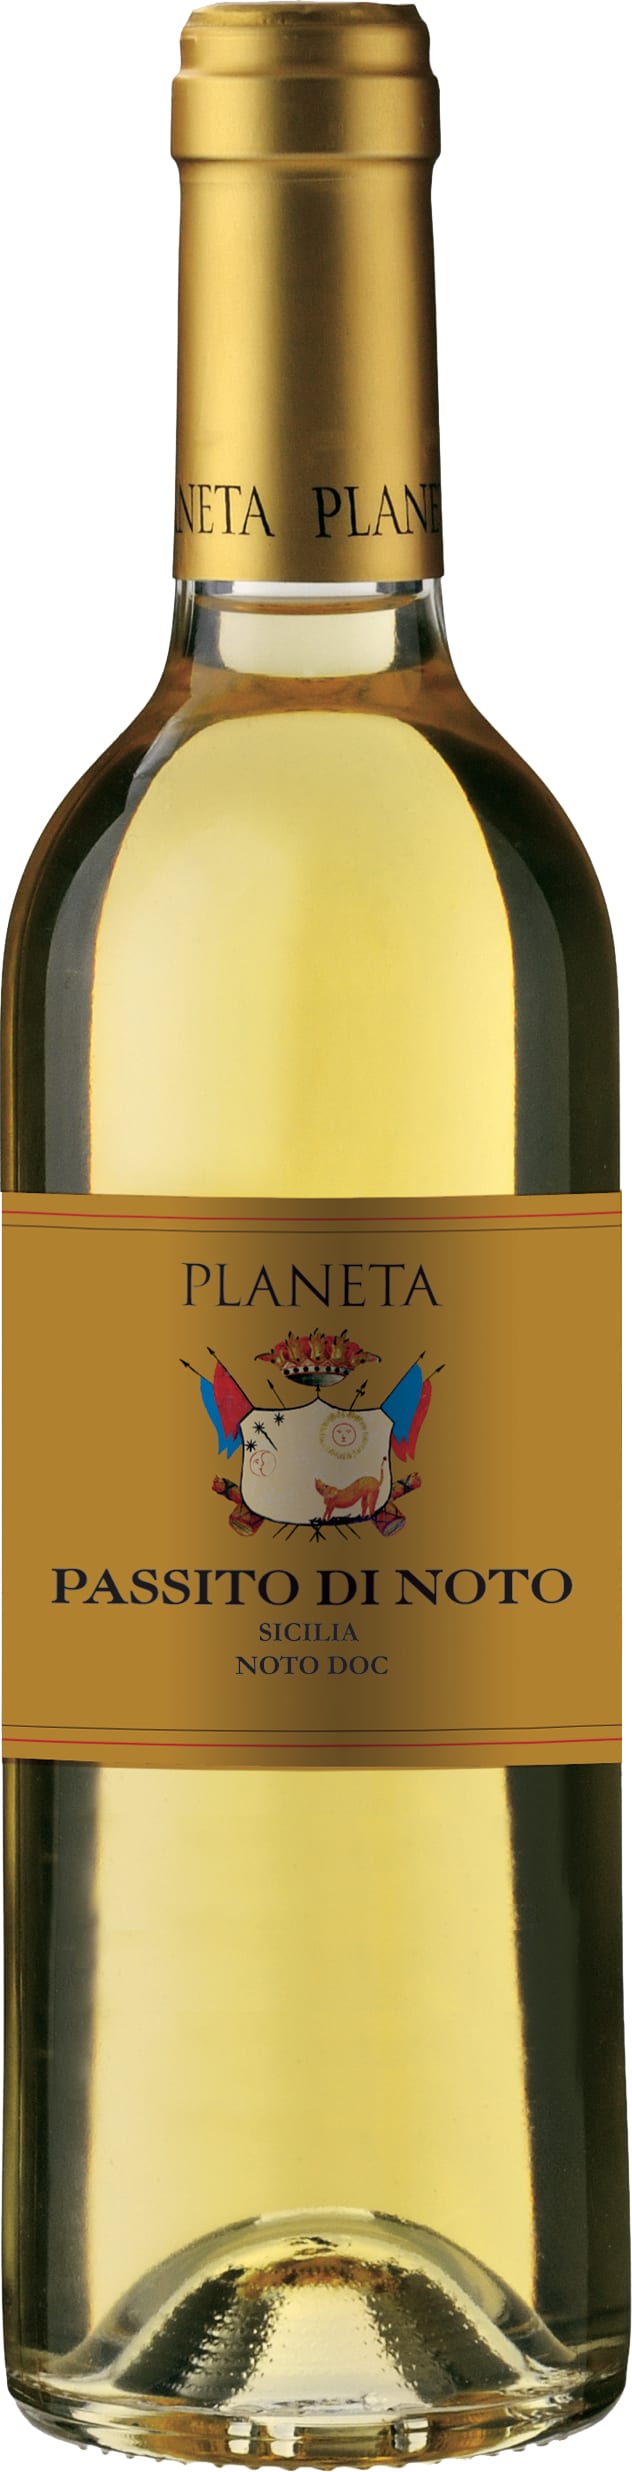 Planeta Passito di Noto 2022 50cl - Buy Planeta Wines from GREAT WINES DIRECT wine shop